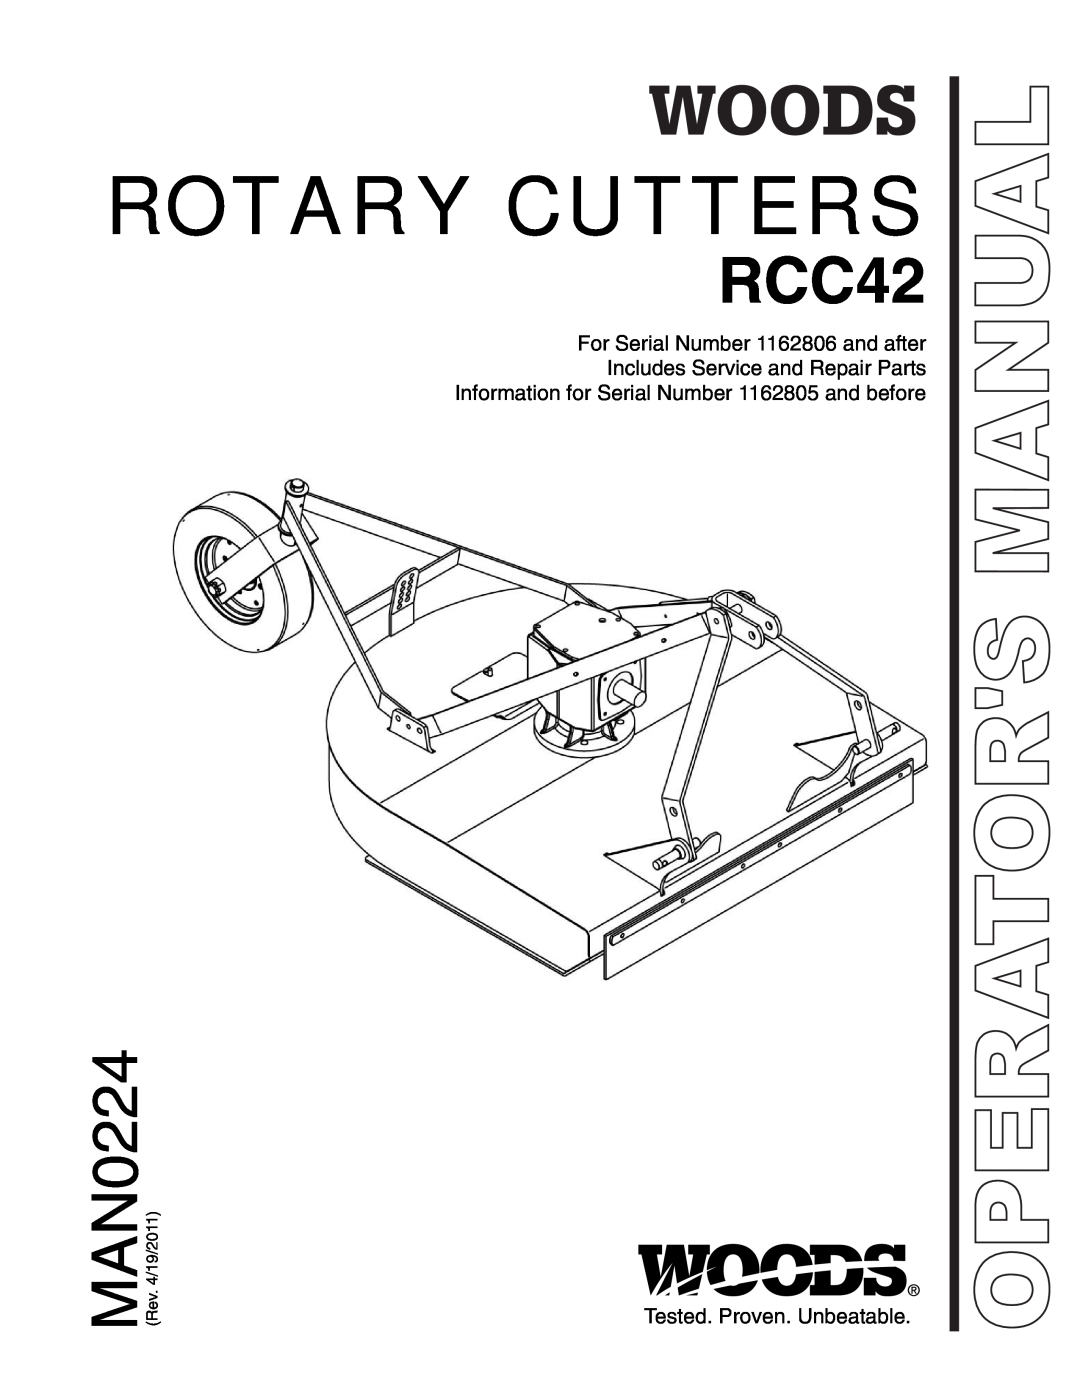 Woods Equipment RCC42 manual Rotary Cutters, MAN0224 